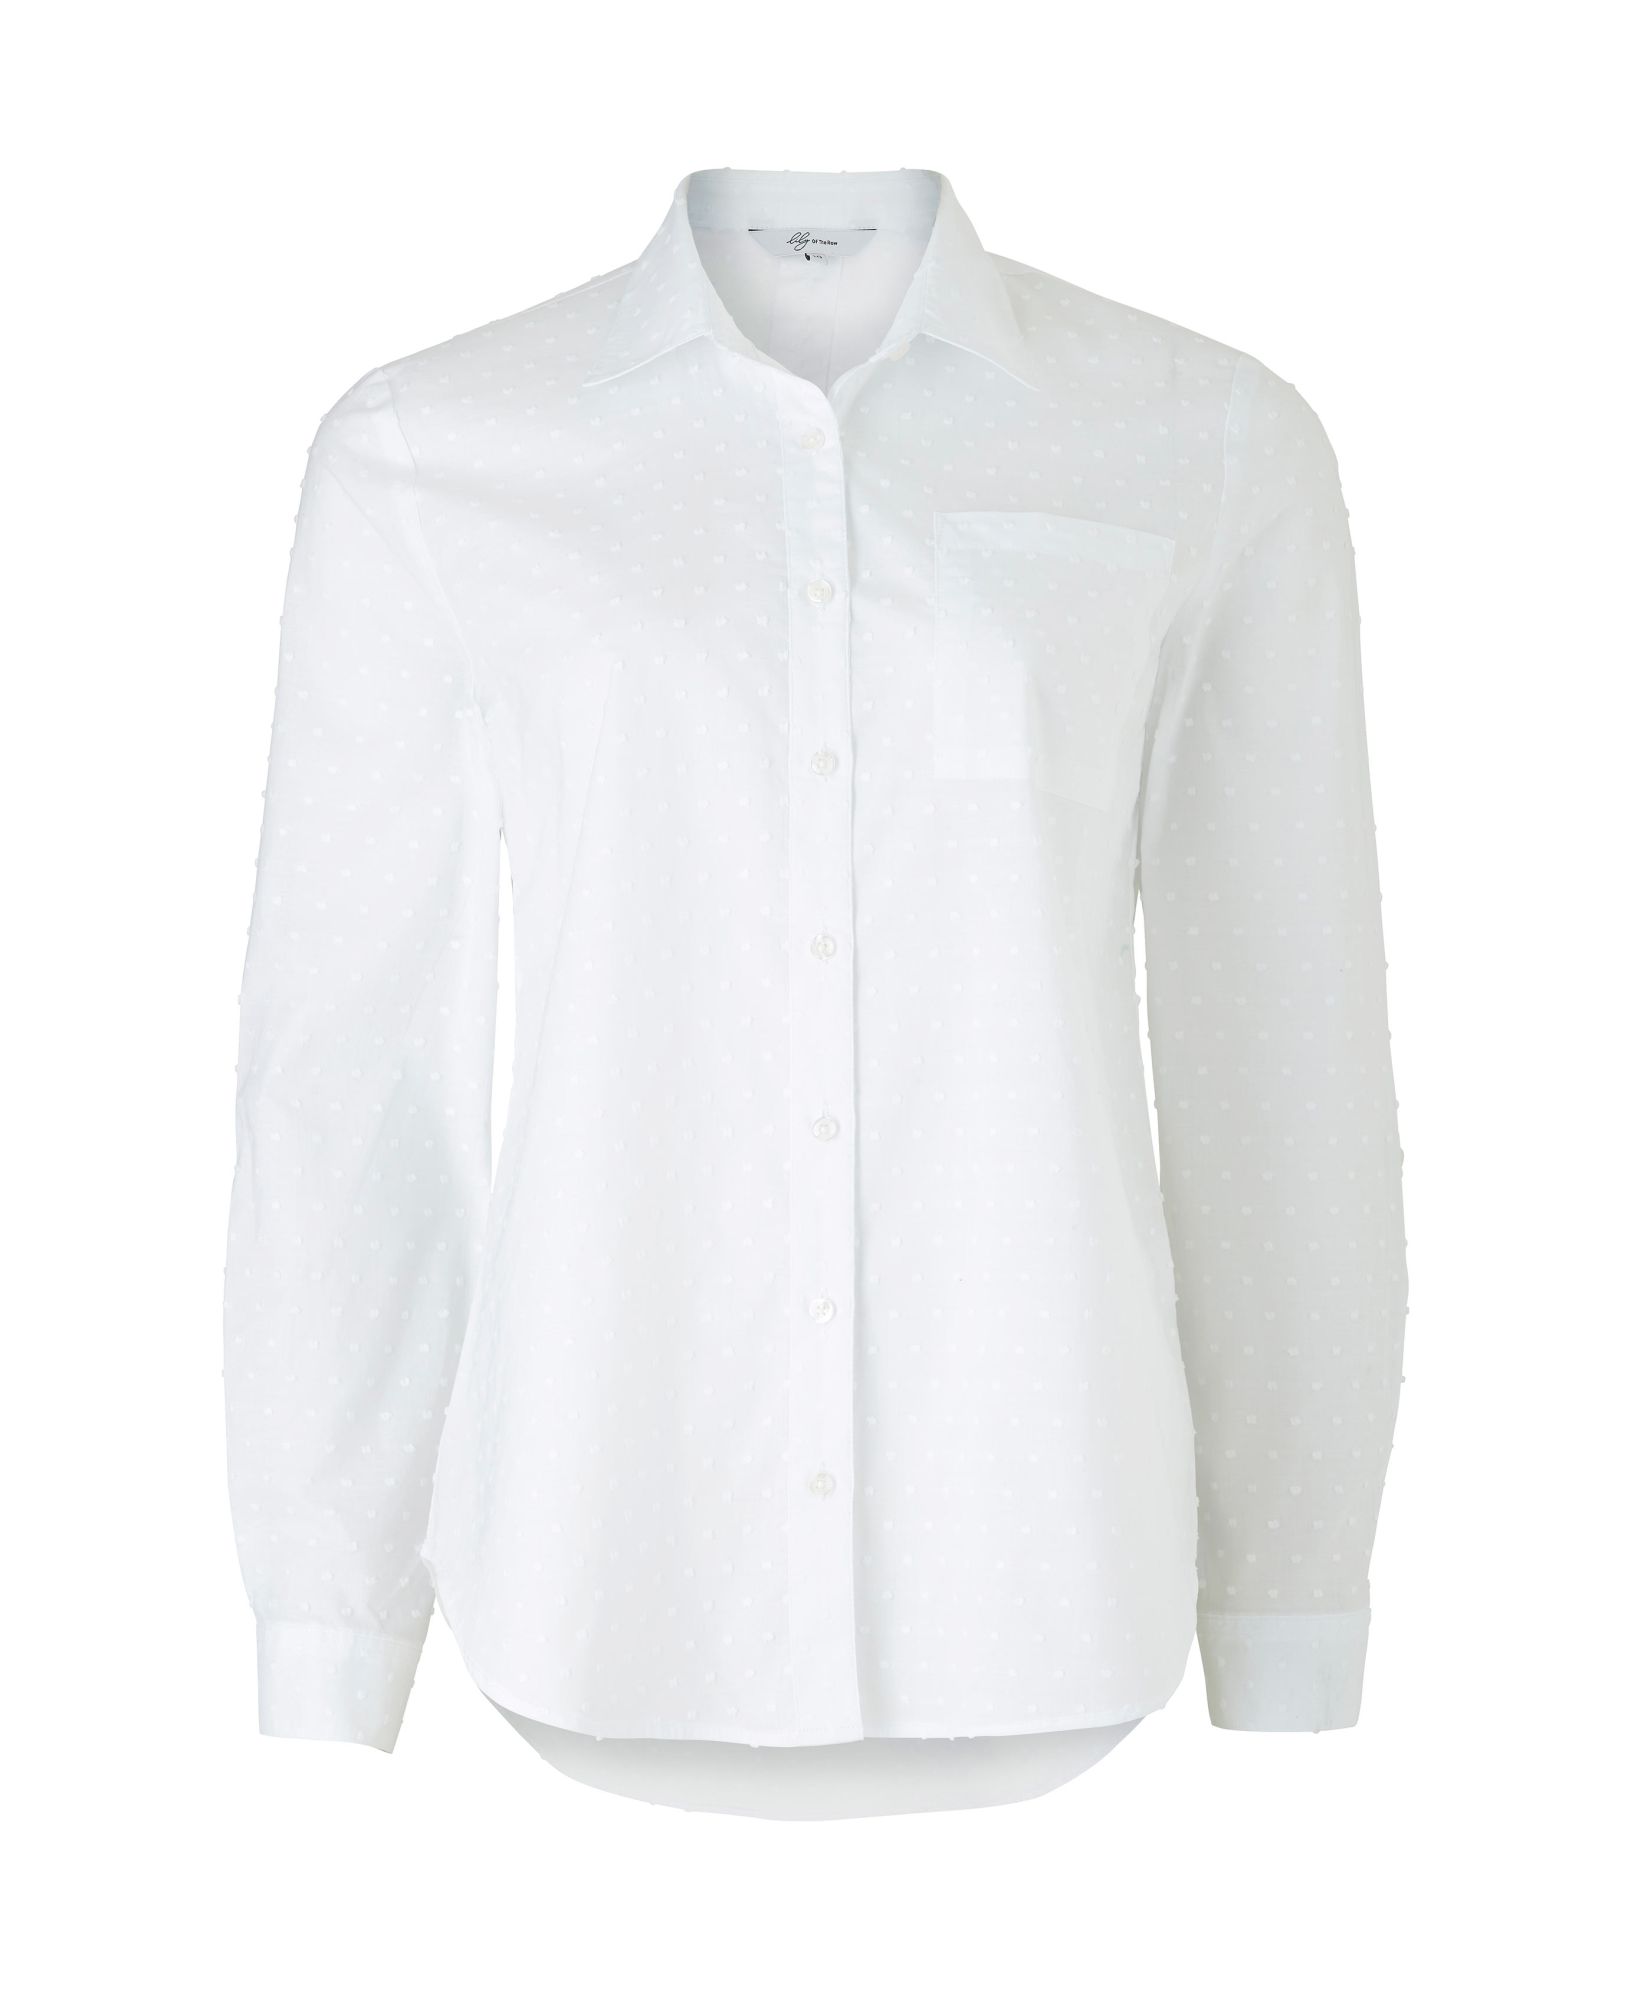 White Textured Semi-Fitted Women's Shirt 12